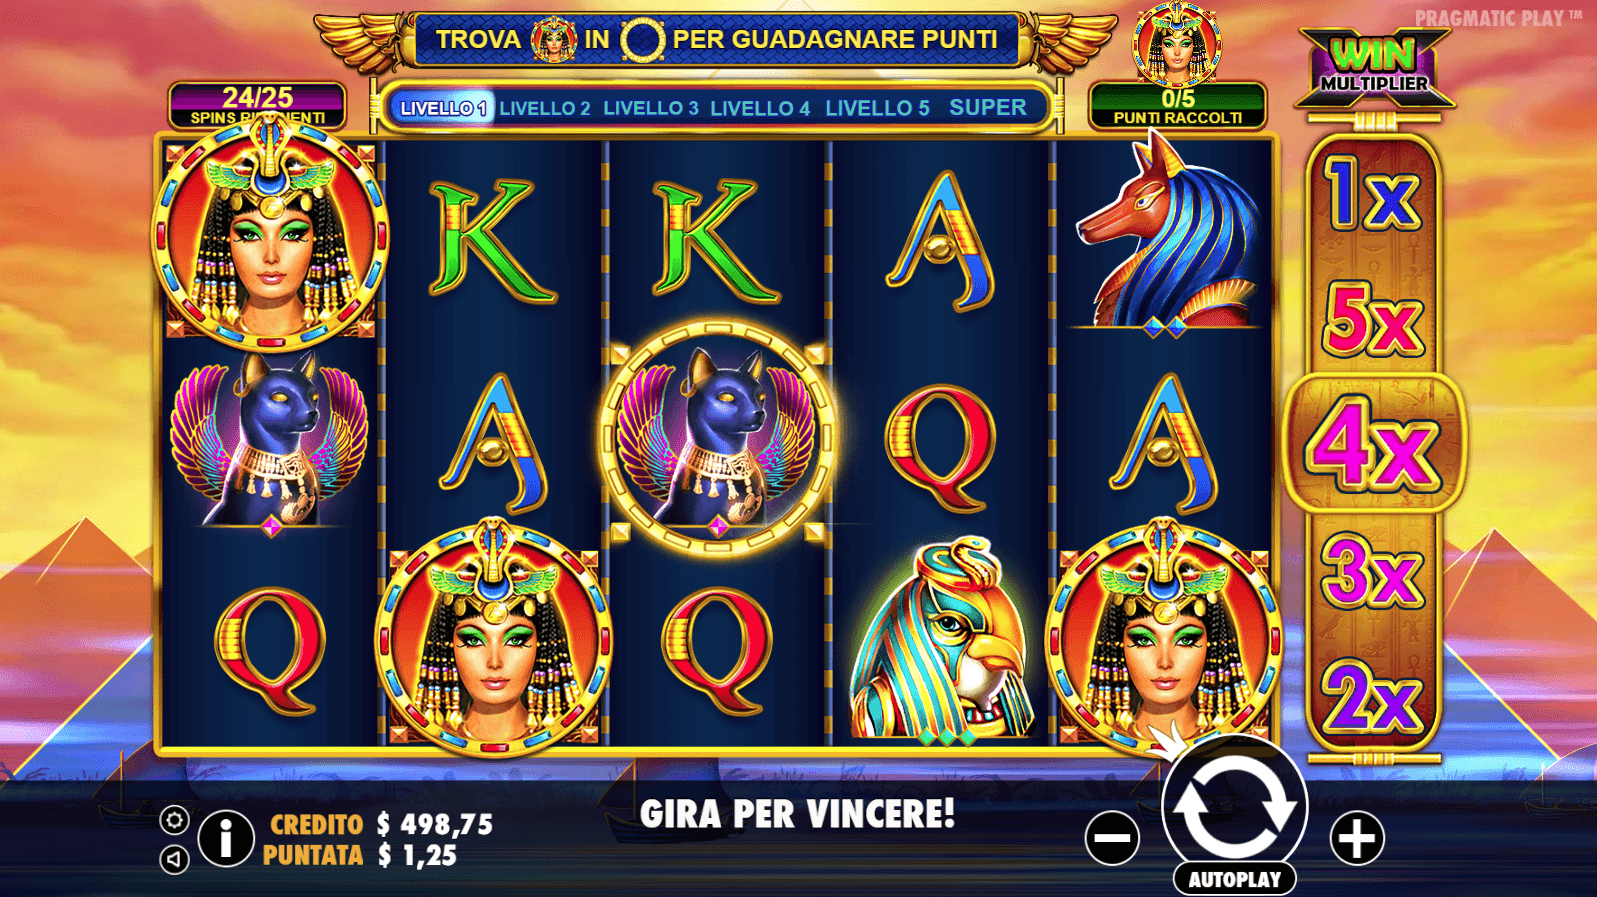 Gioca Slot Machine Gratis